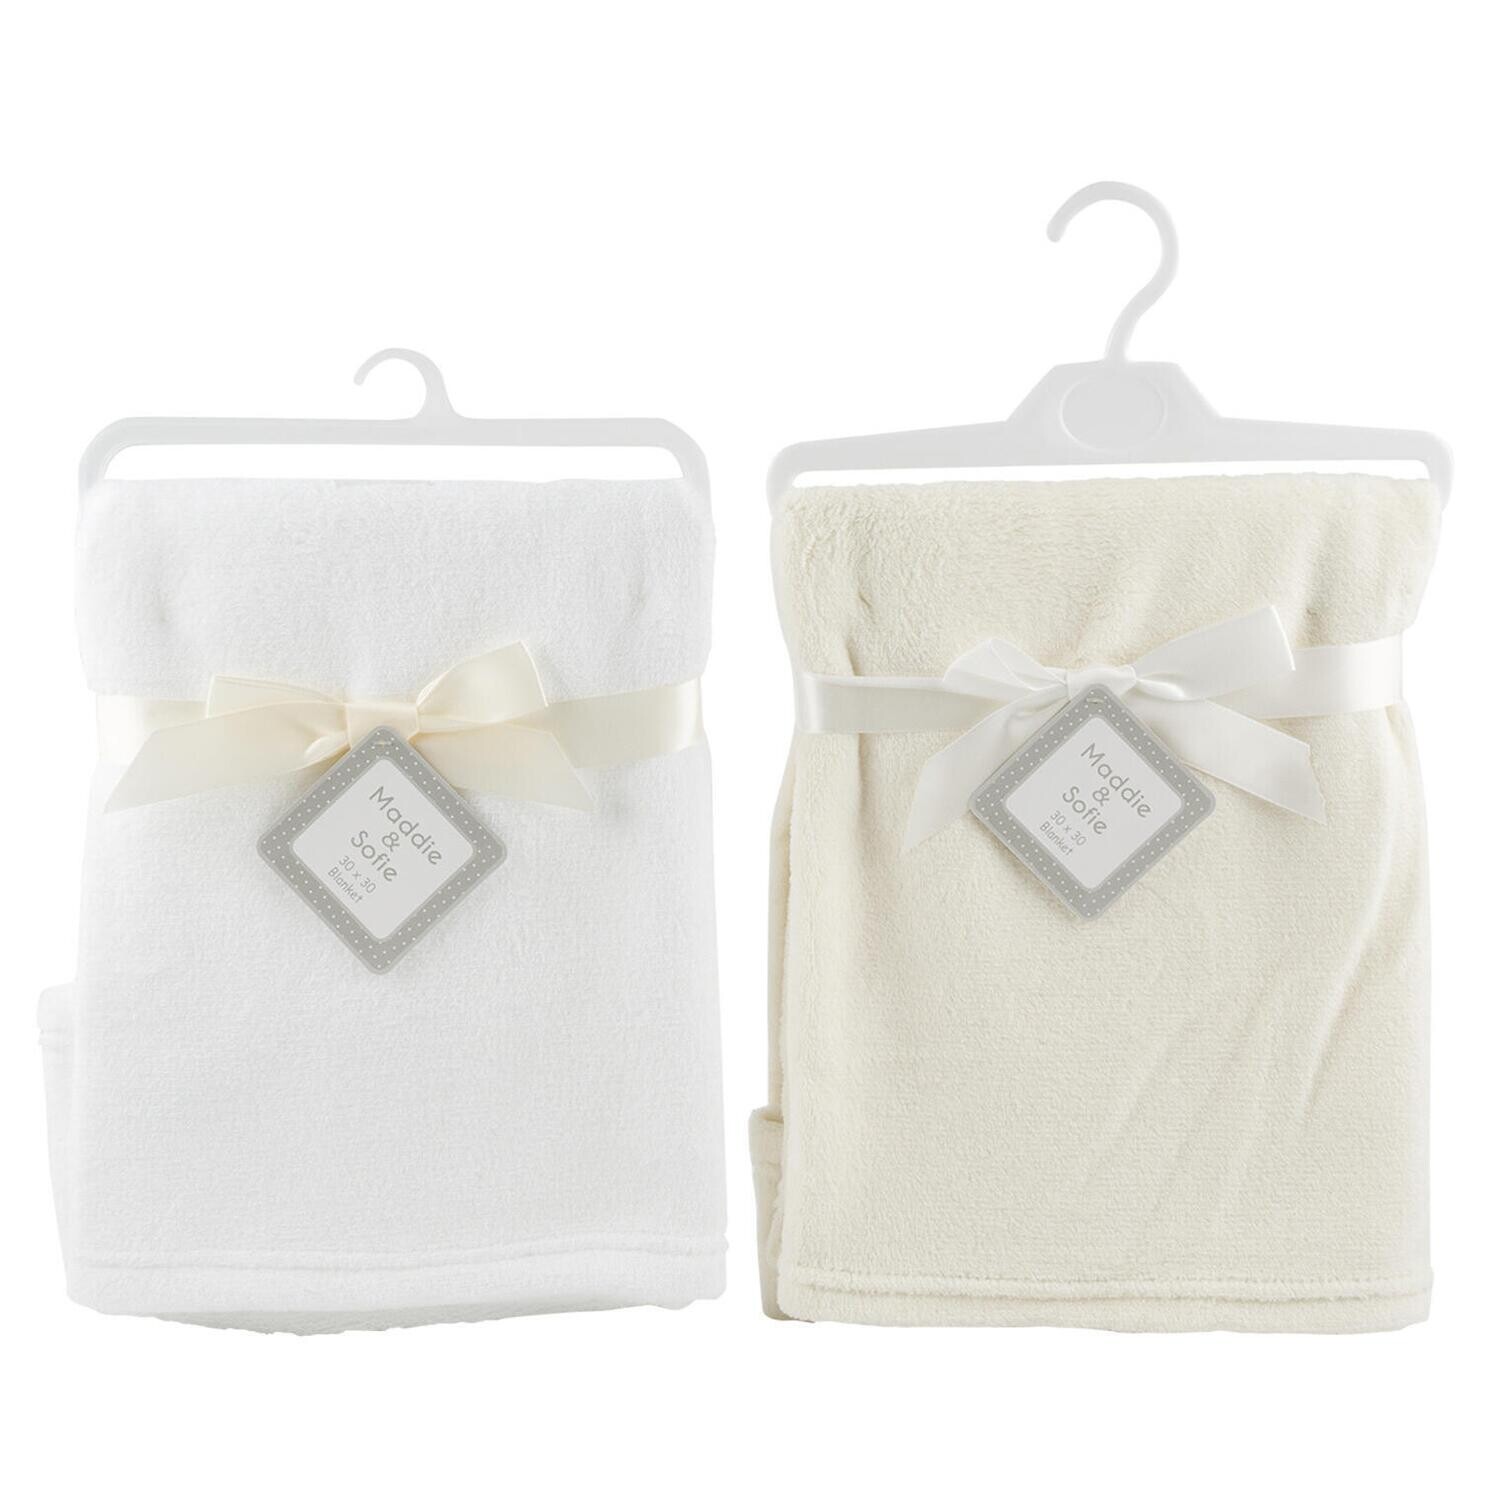 . Case of [60] Baby Blankets - 0-9M, White & Ivory, 30" x 30" .